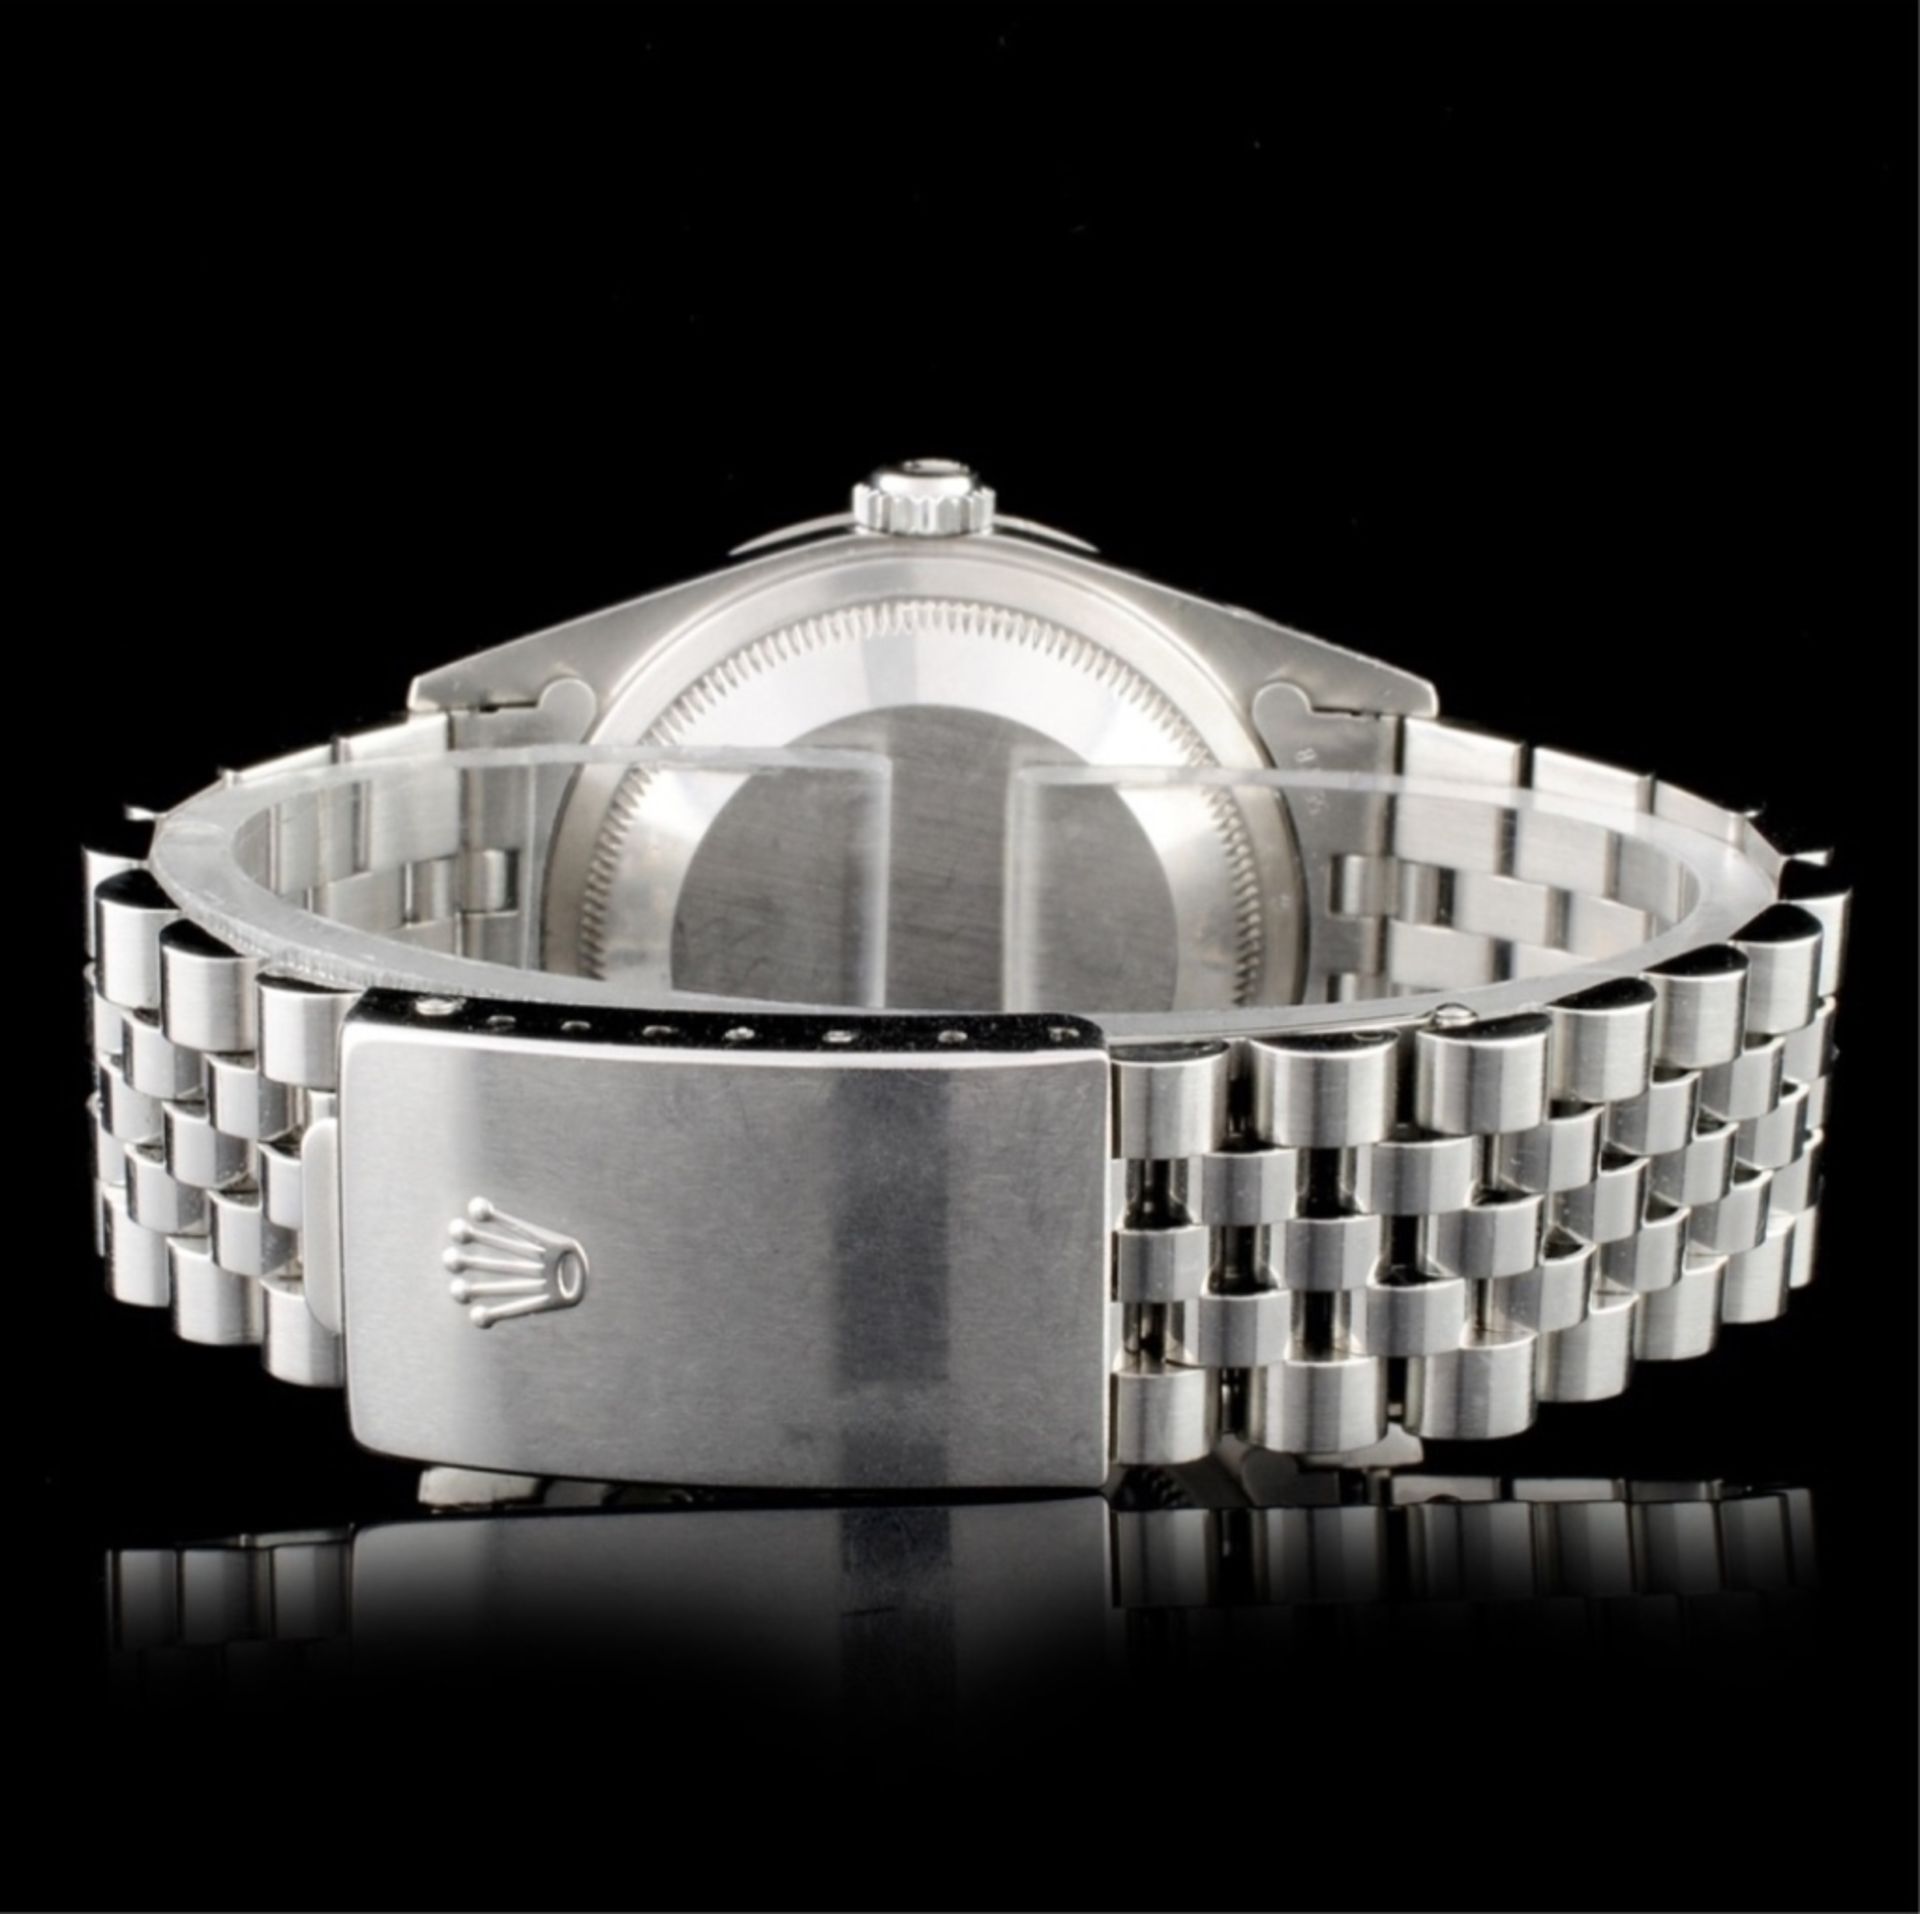 Rolex SS DateJust Diamond 36mm Watch - Image 3 of 5